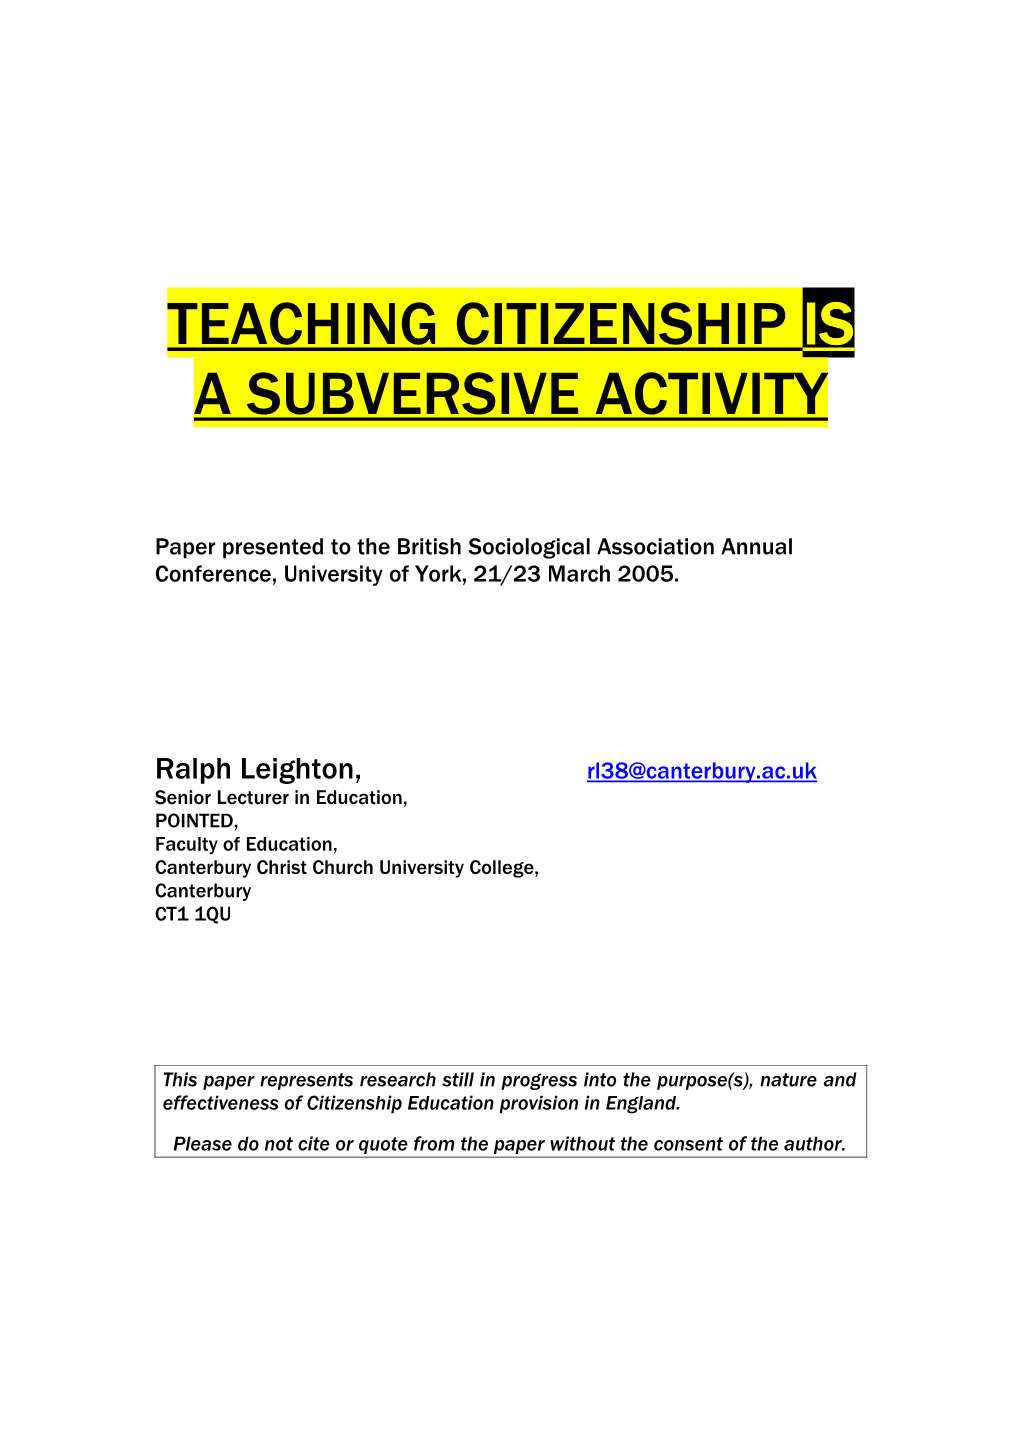 Teaching Citizenship As a Subversive Activity